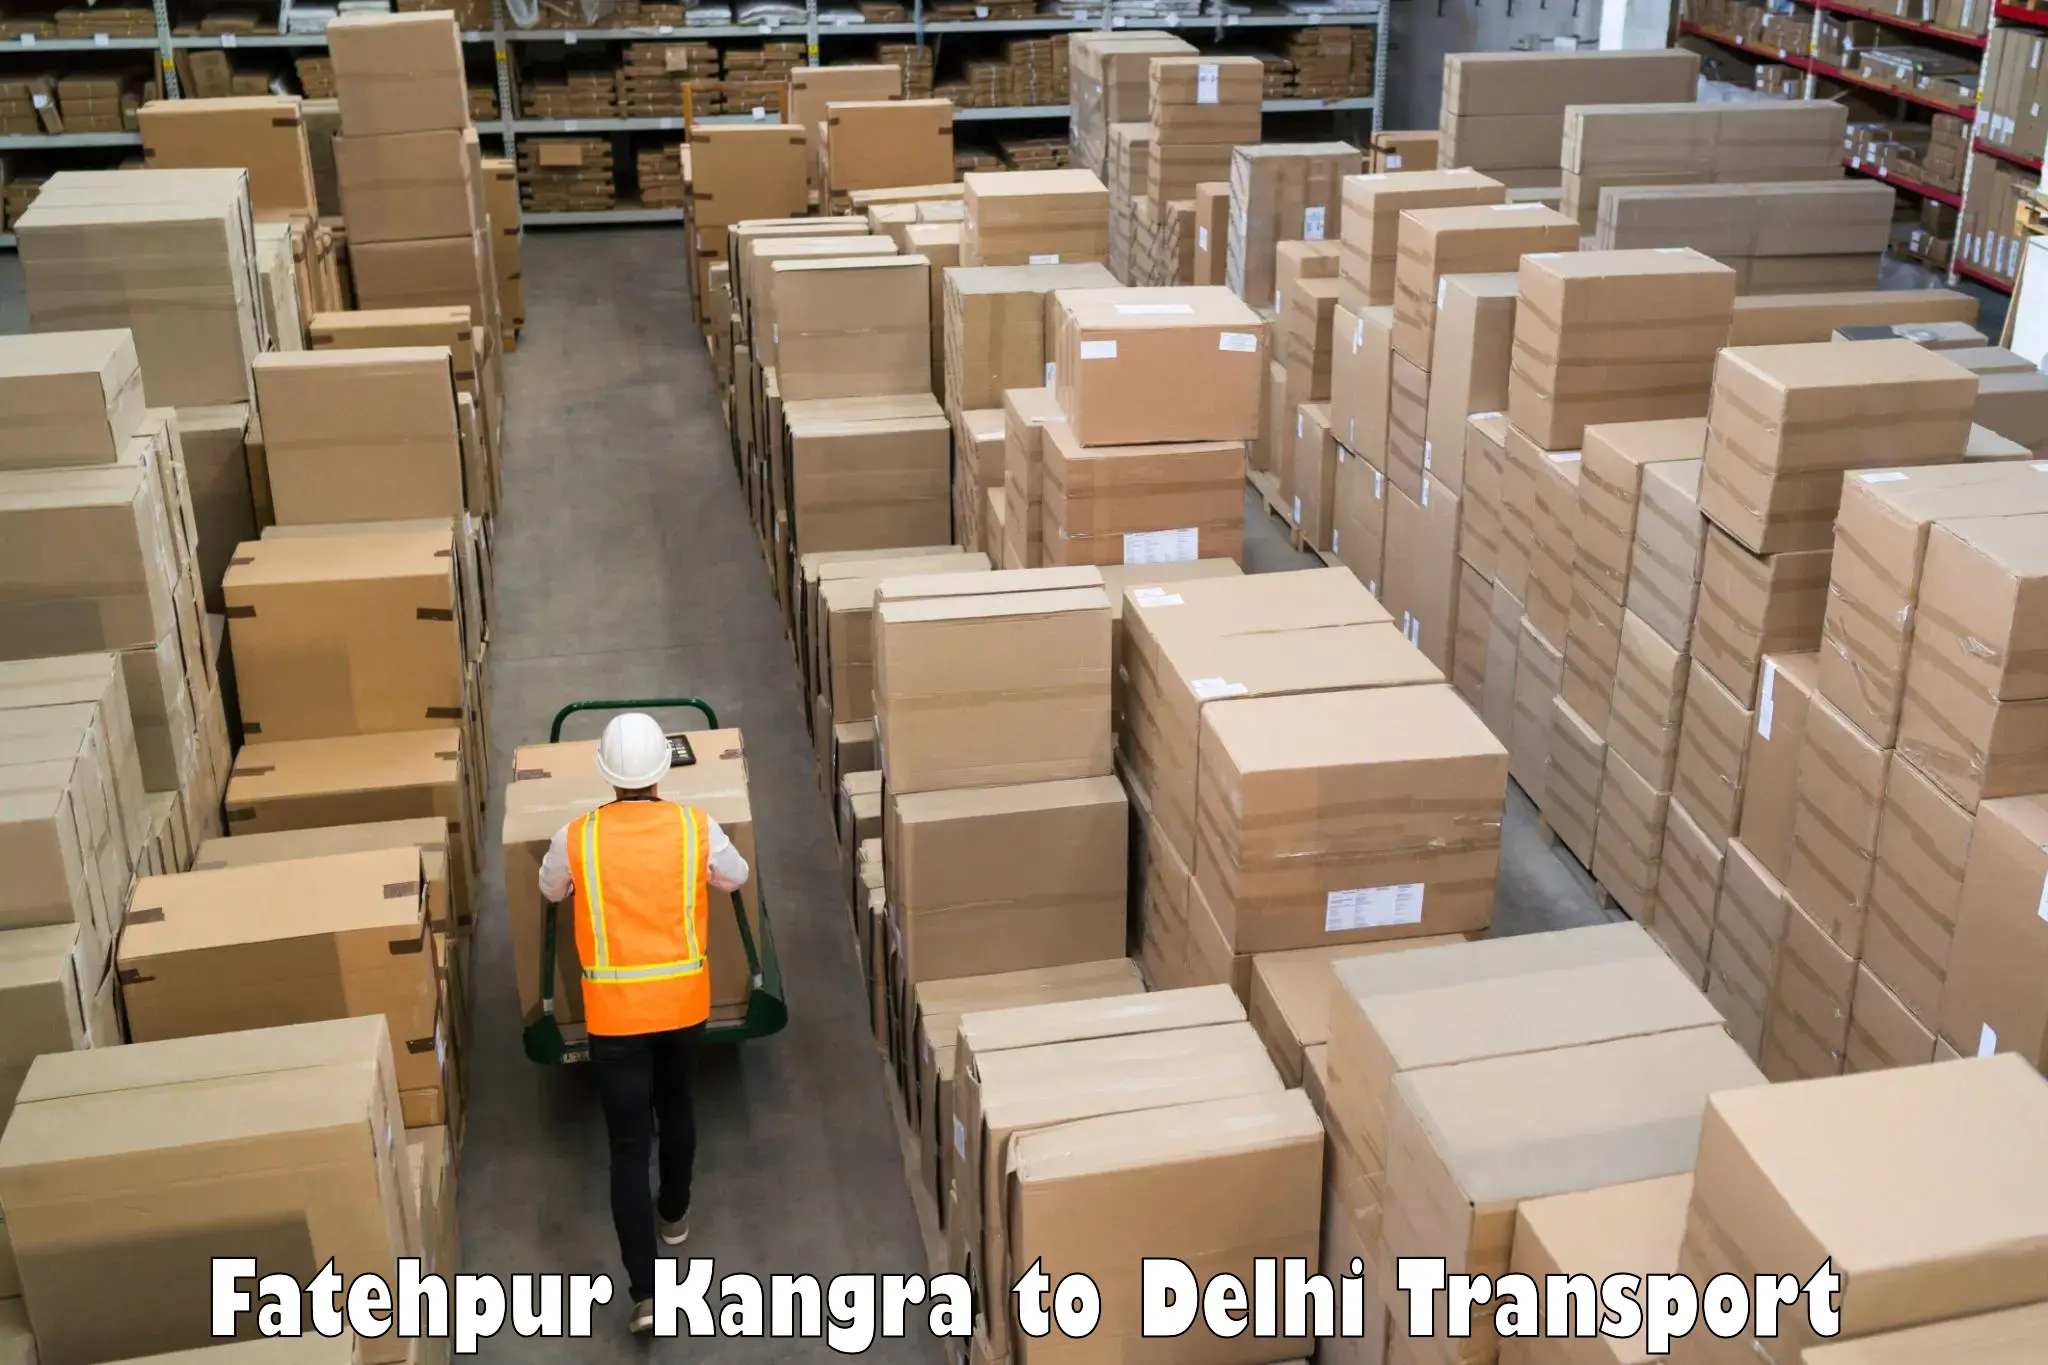 Truck transport companies in India Fatehpur Kangra to Delhi